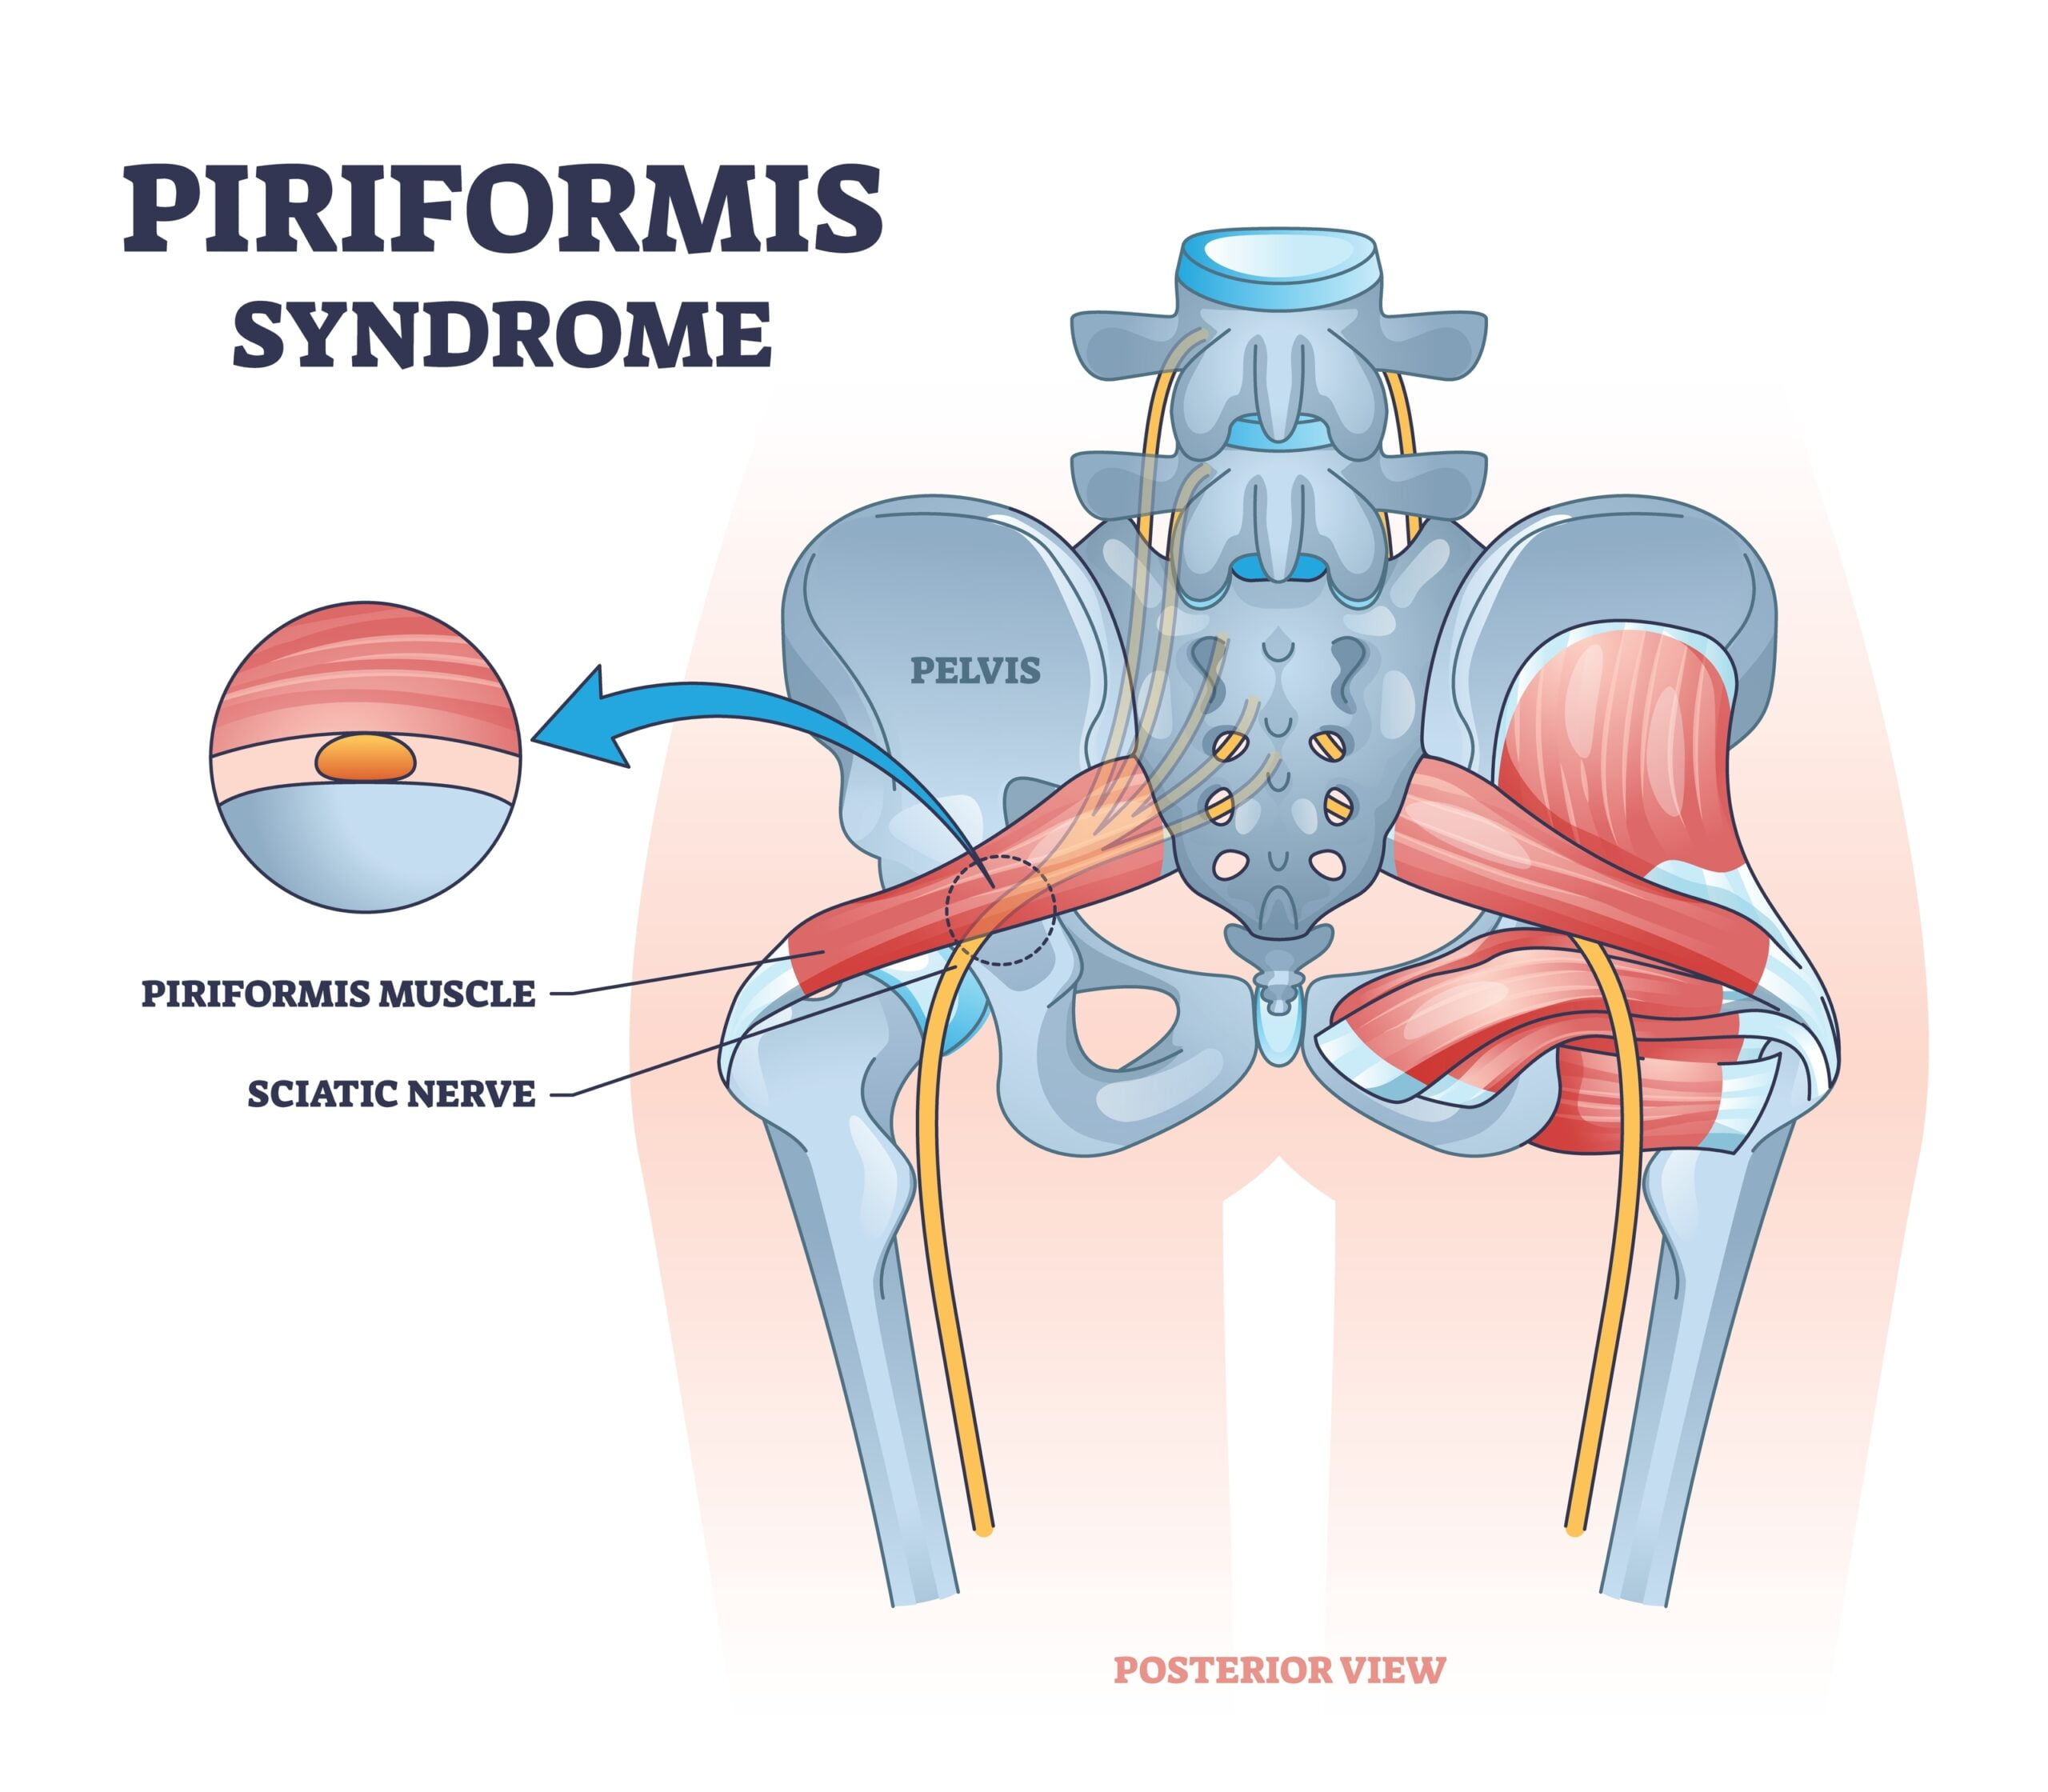 Piriformis Syndrome and Sciatica Nerve - Complete Orthopedics